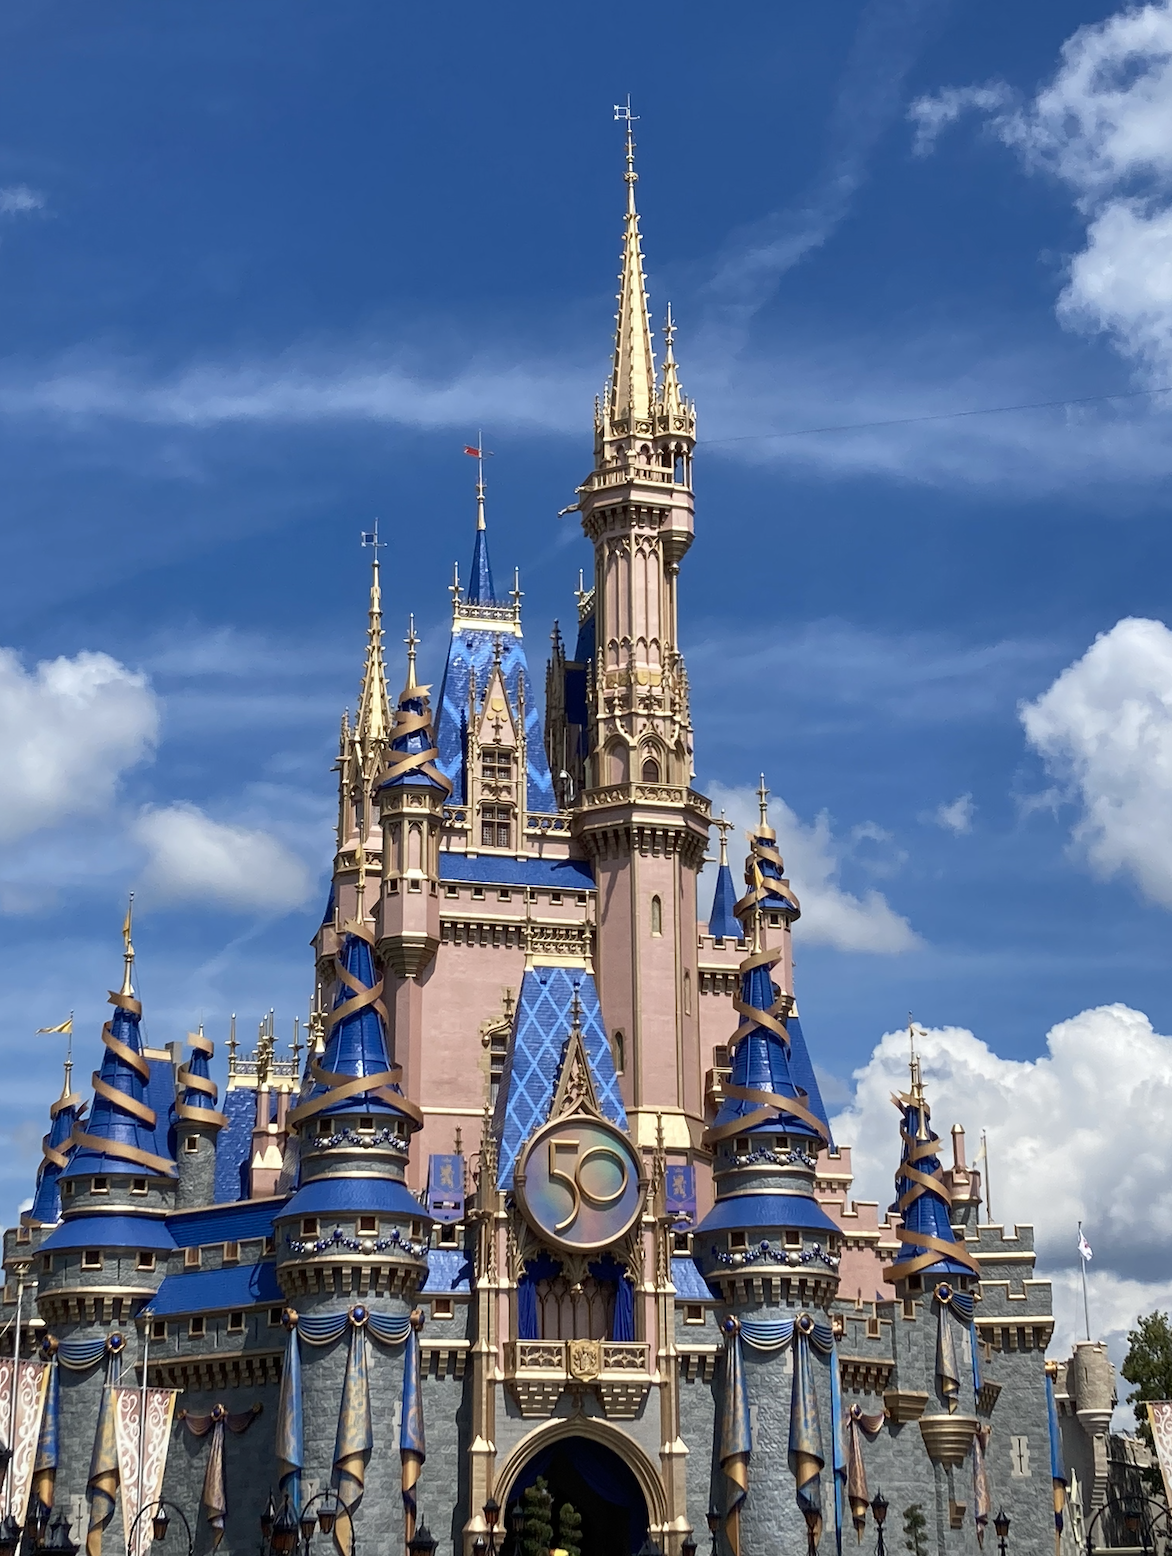 Disney&#x27;s Cinderella Castle adorned with a &quot;50&quot; emblem for the anniversary celebration